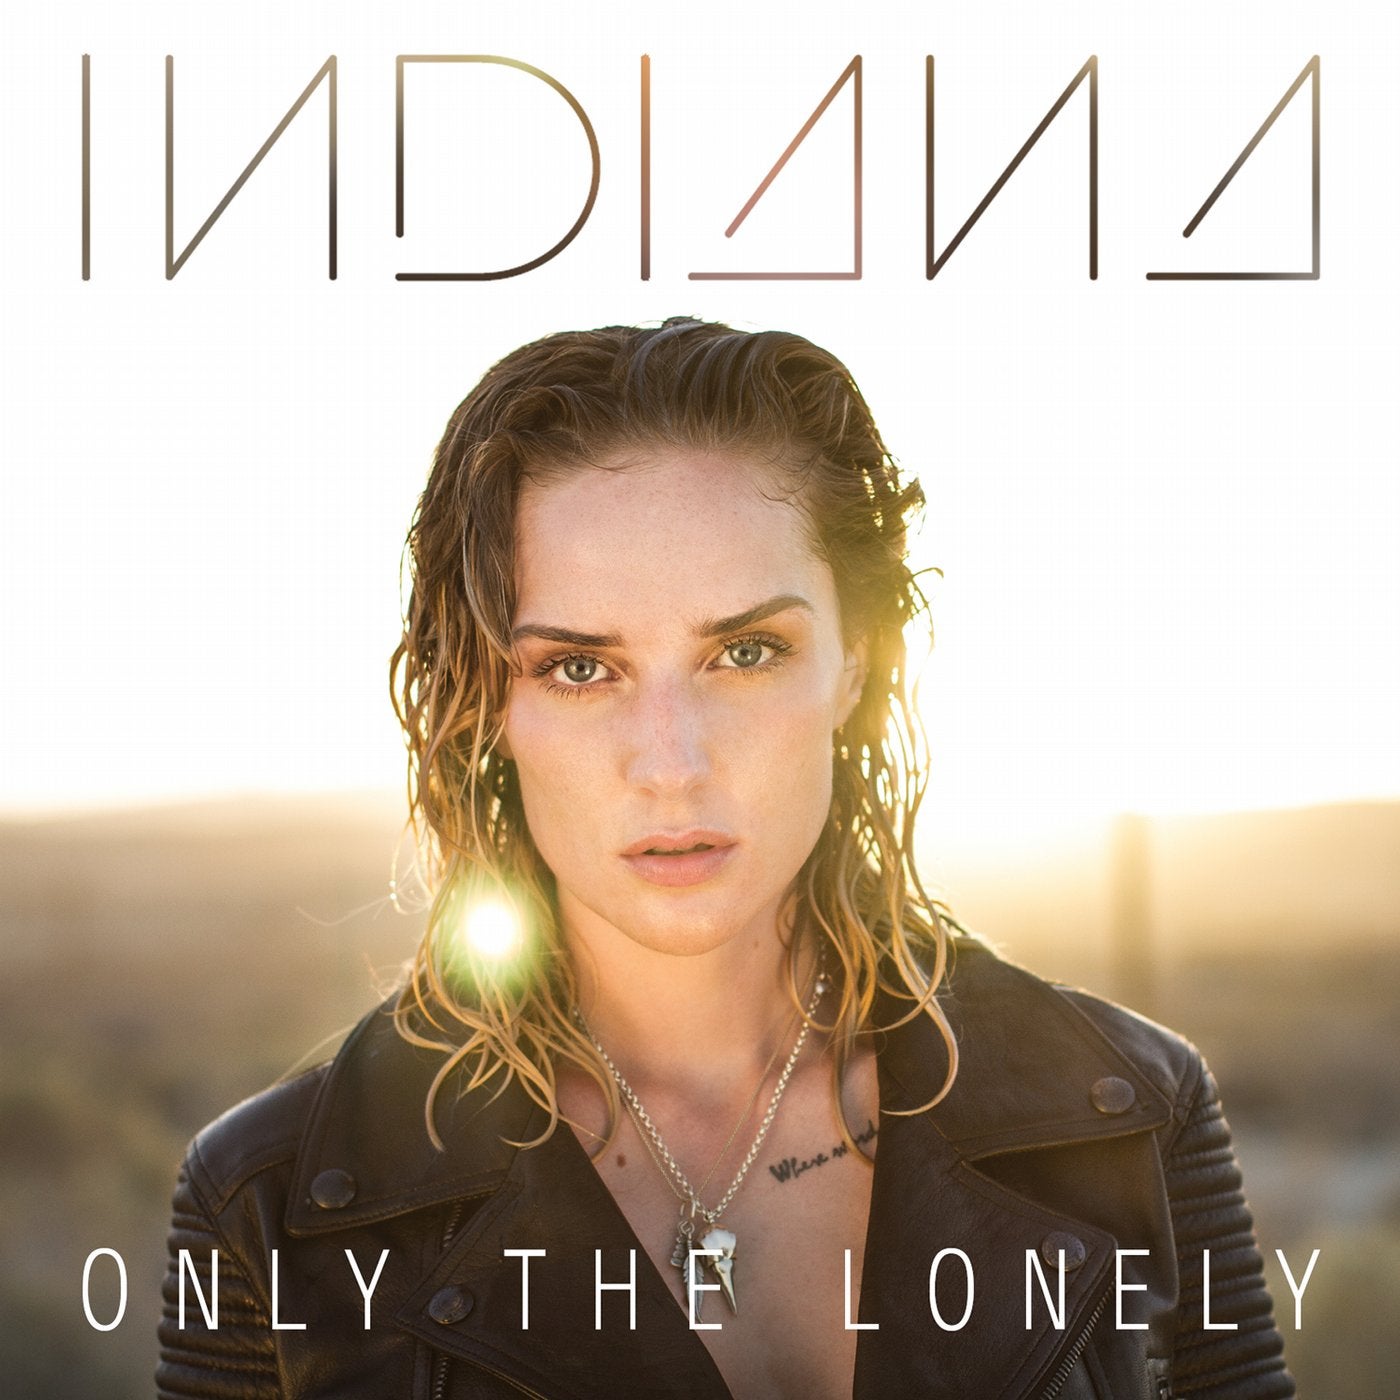 Лорен Хенсон Indiana. Lonely only. Индиана Джек. "Indiana" && ( исполнитель | группа | музыка | Music | Band | artist ) && (фото | photo). Only the lonely